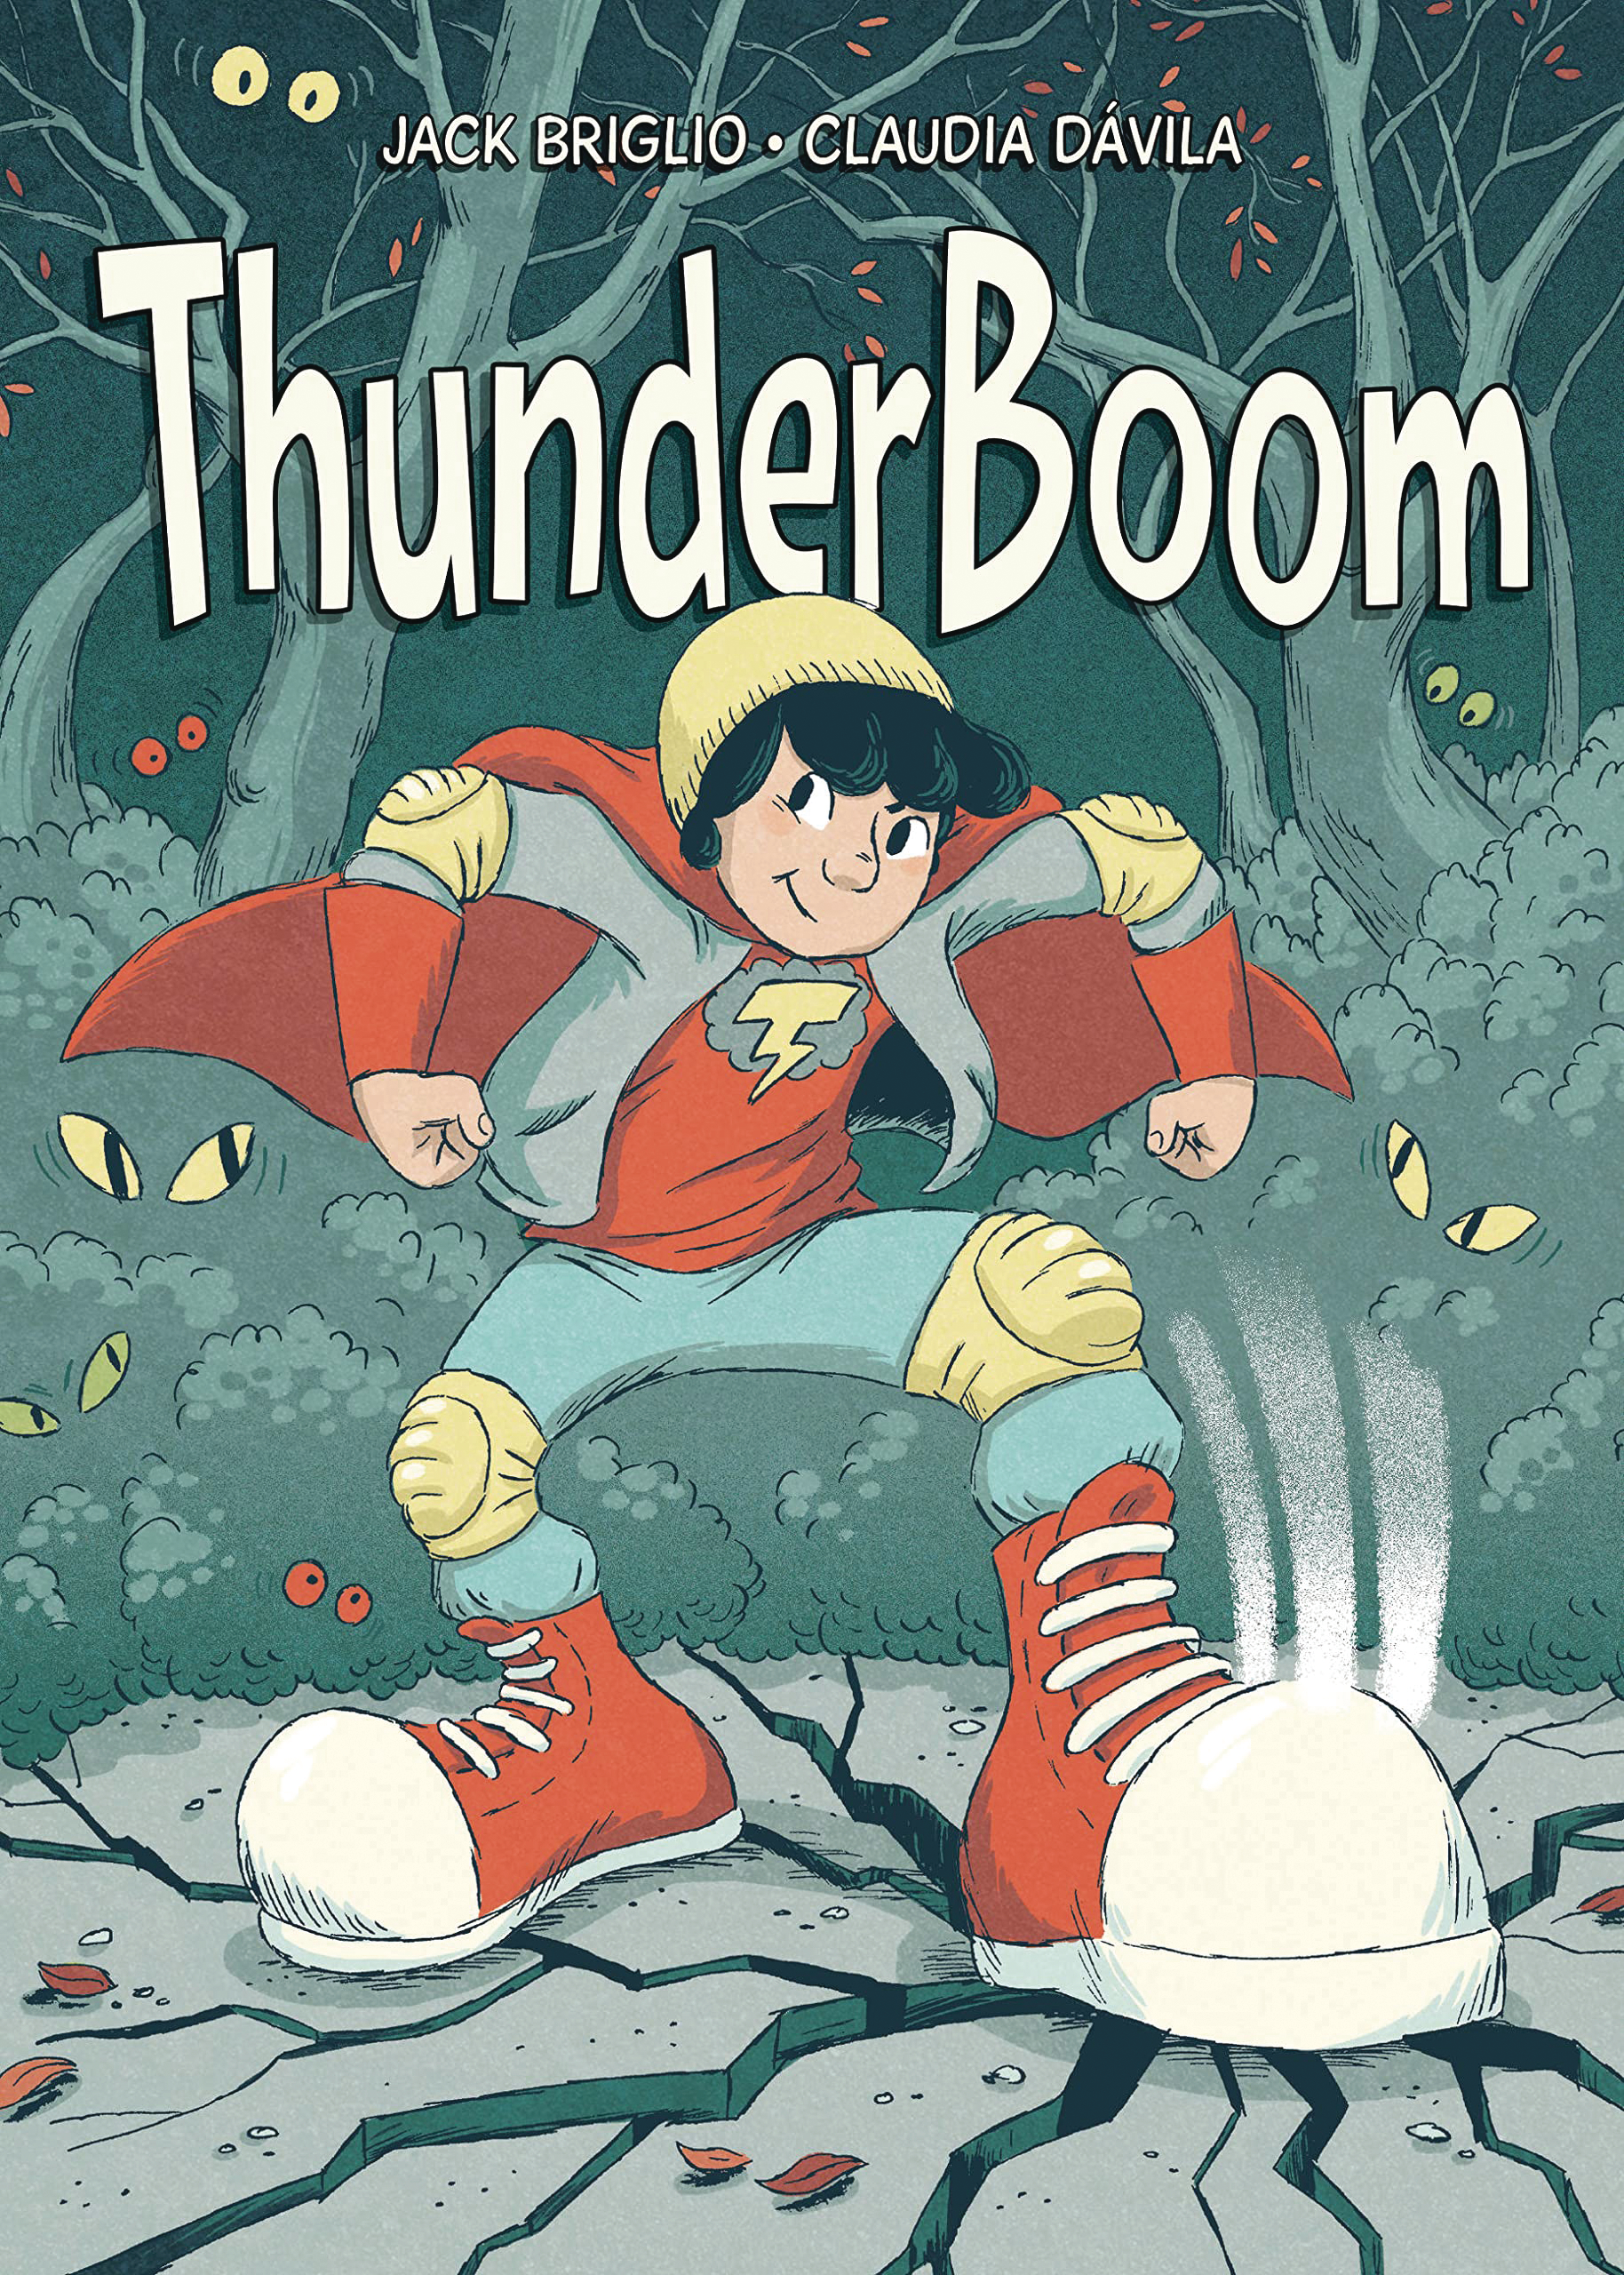 Thunderboom Graphic Novel